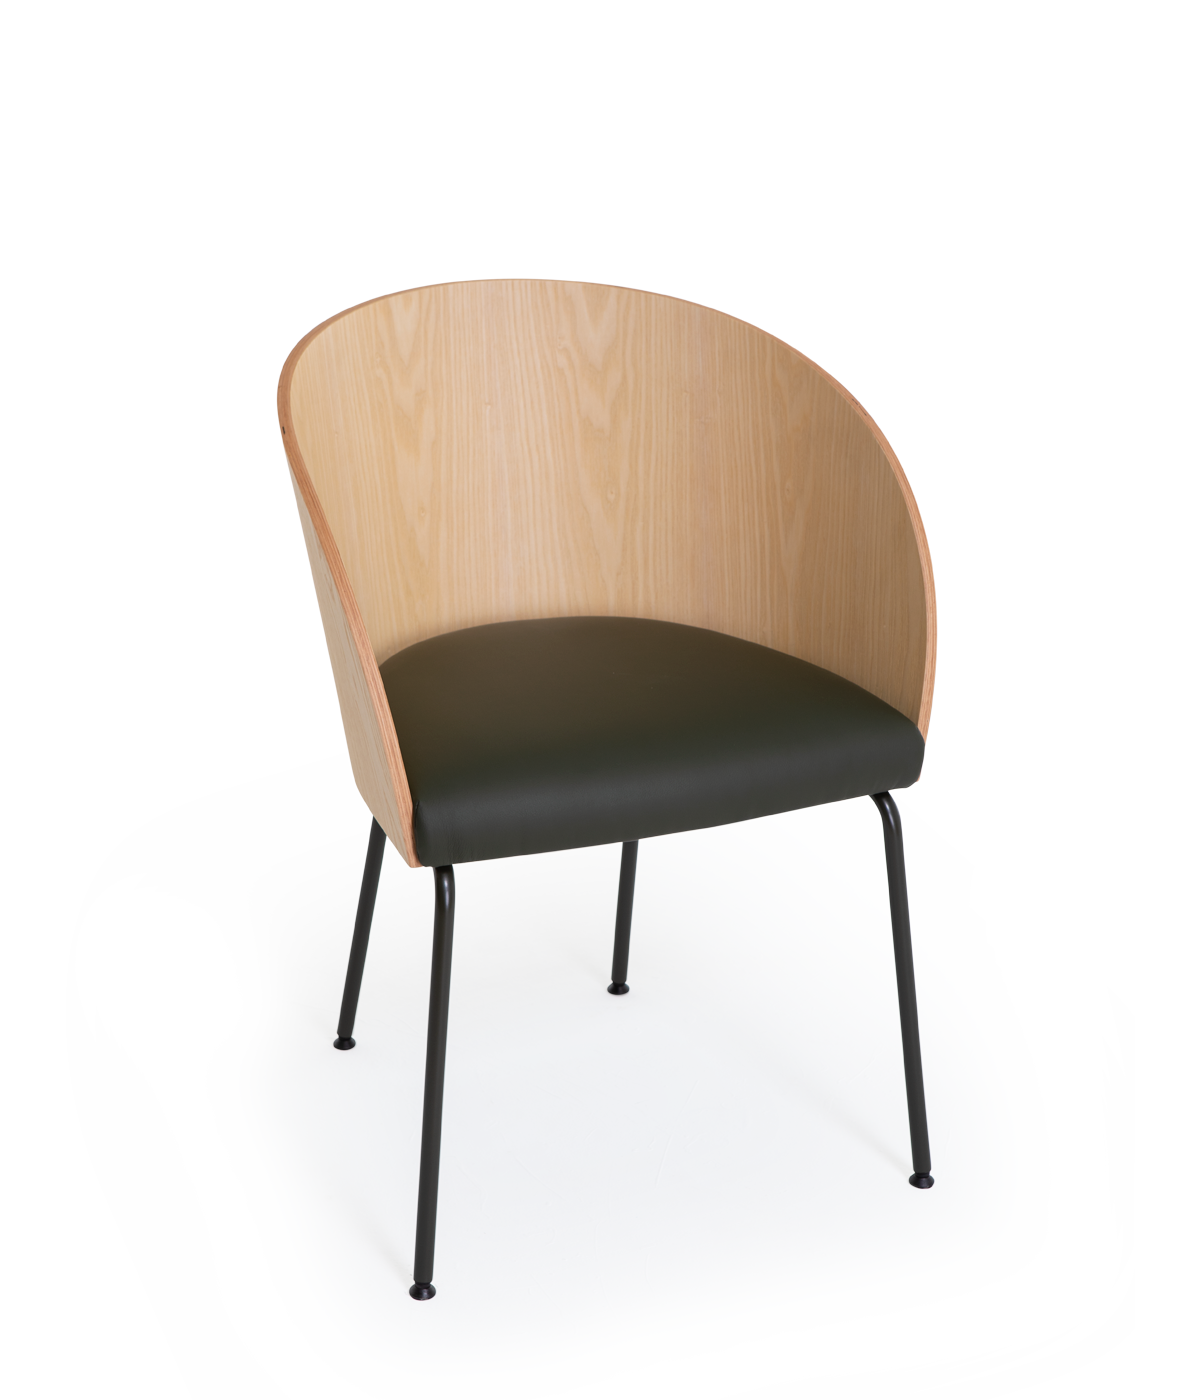 Cistell Original chair with armrests and metallic legs - Vergés